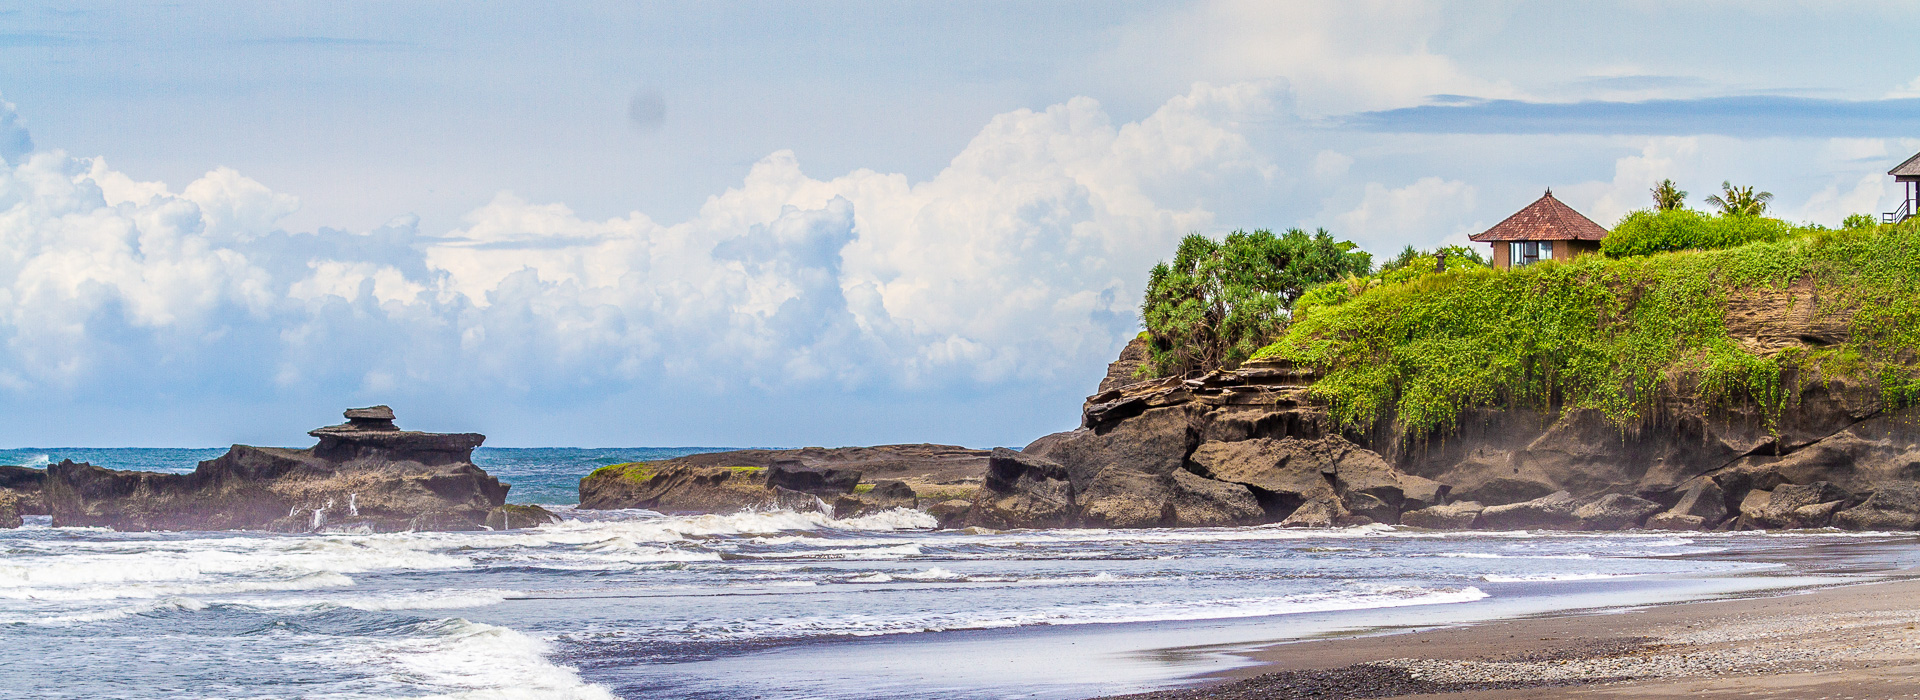 Image of the beach in Balian.